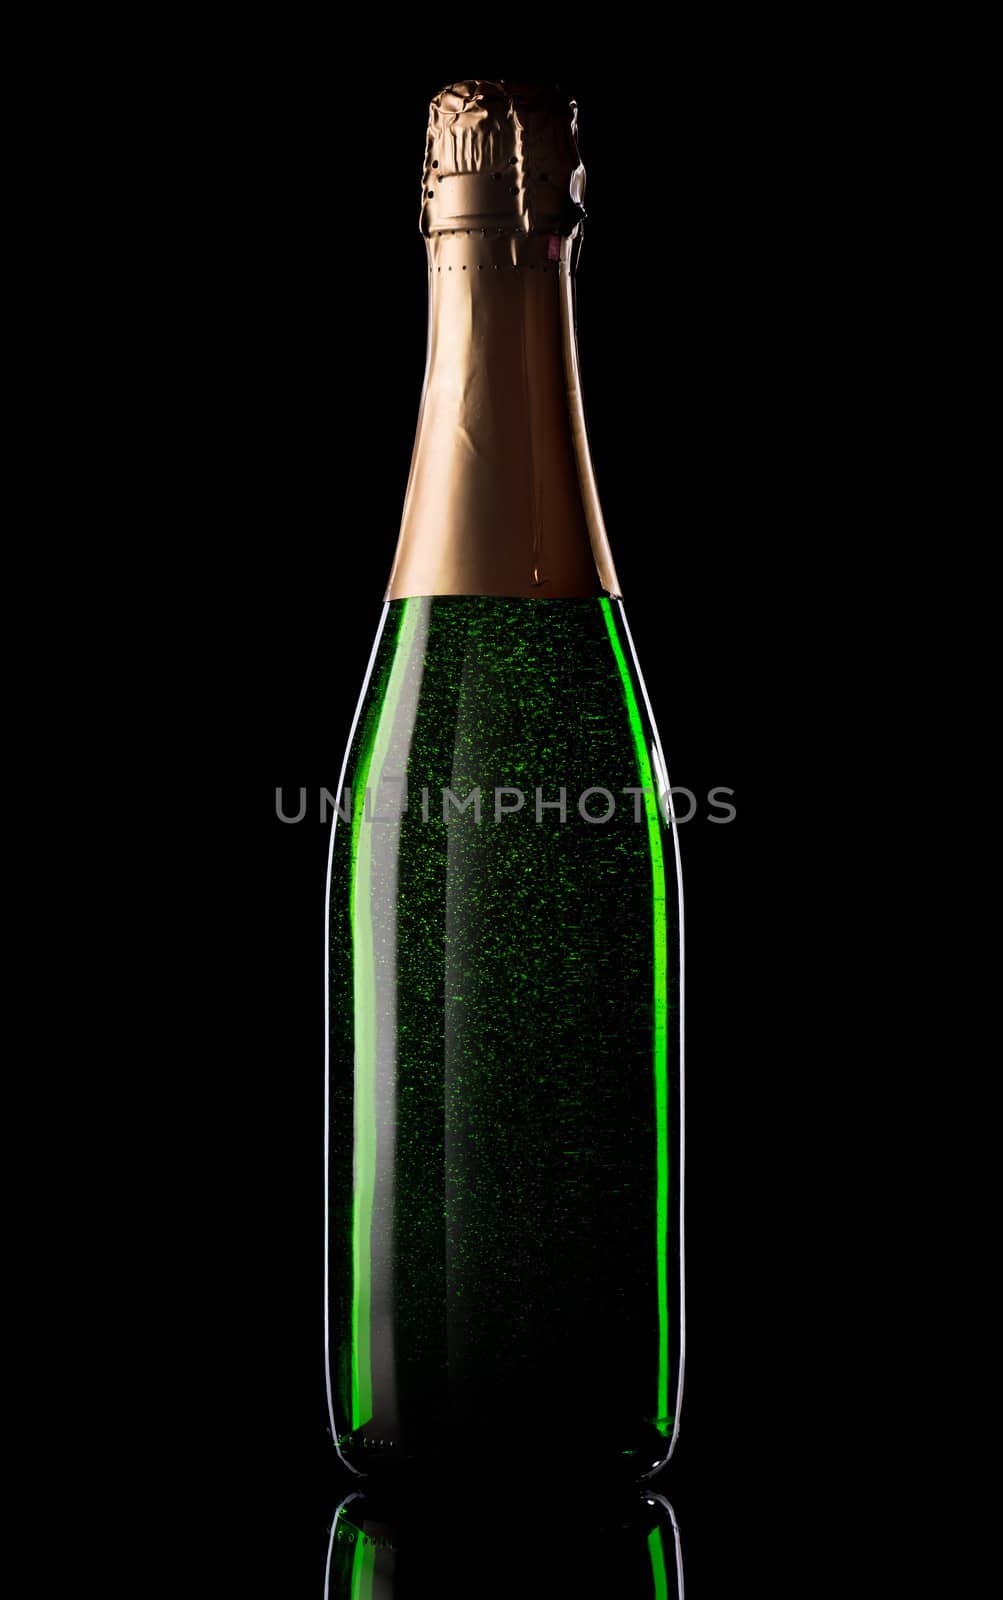 Green bottle of champagne on black background